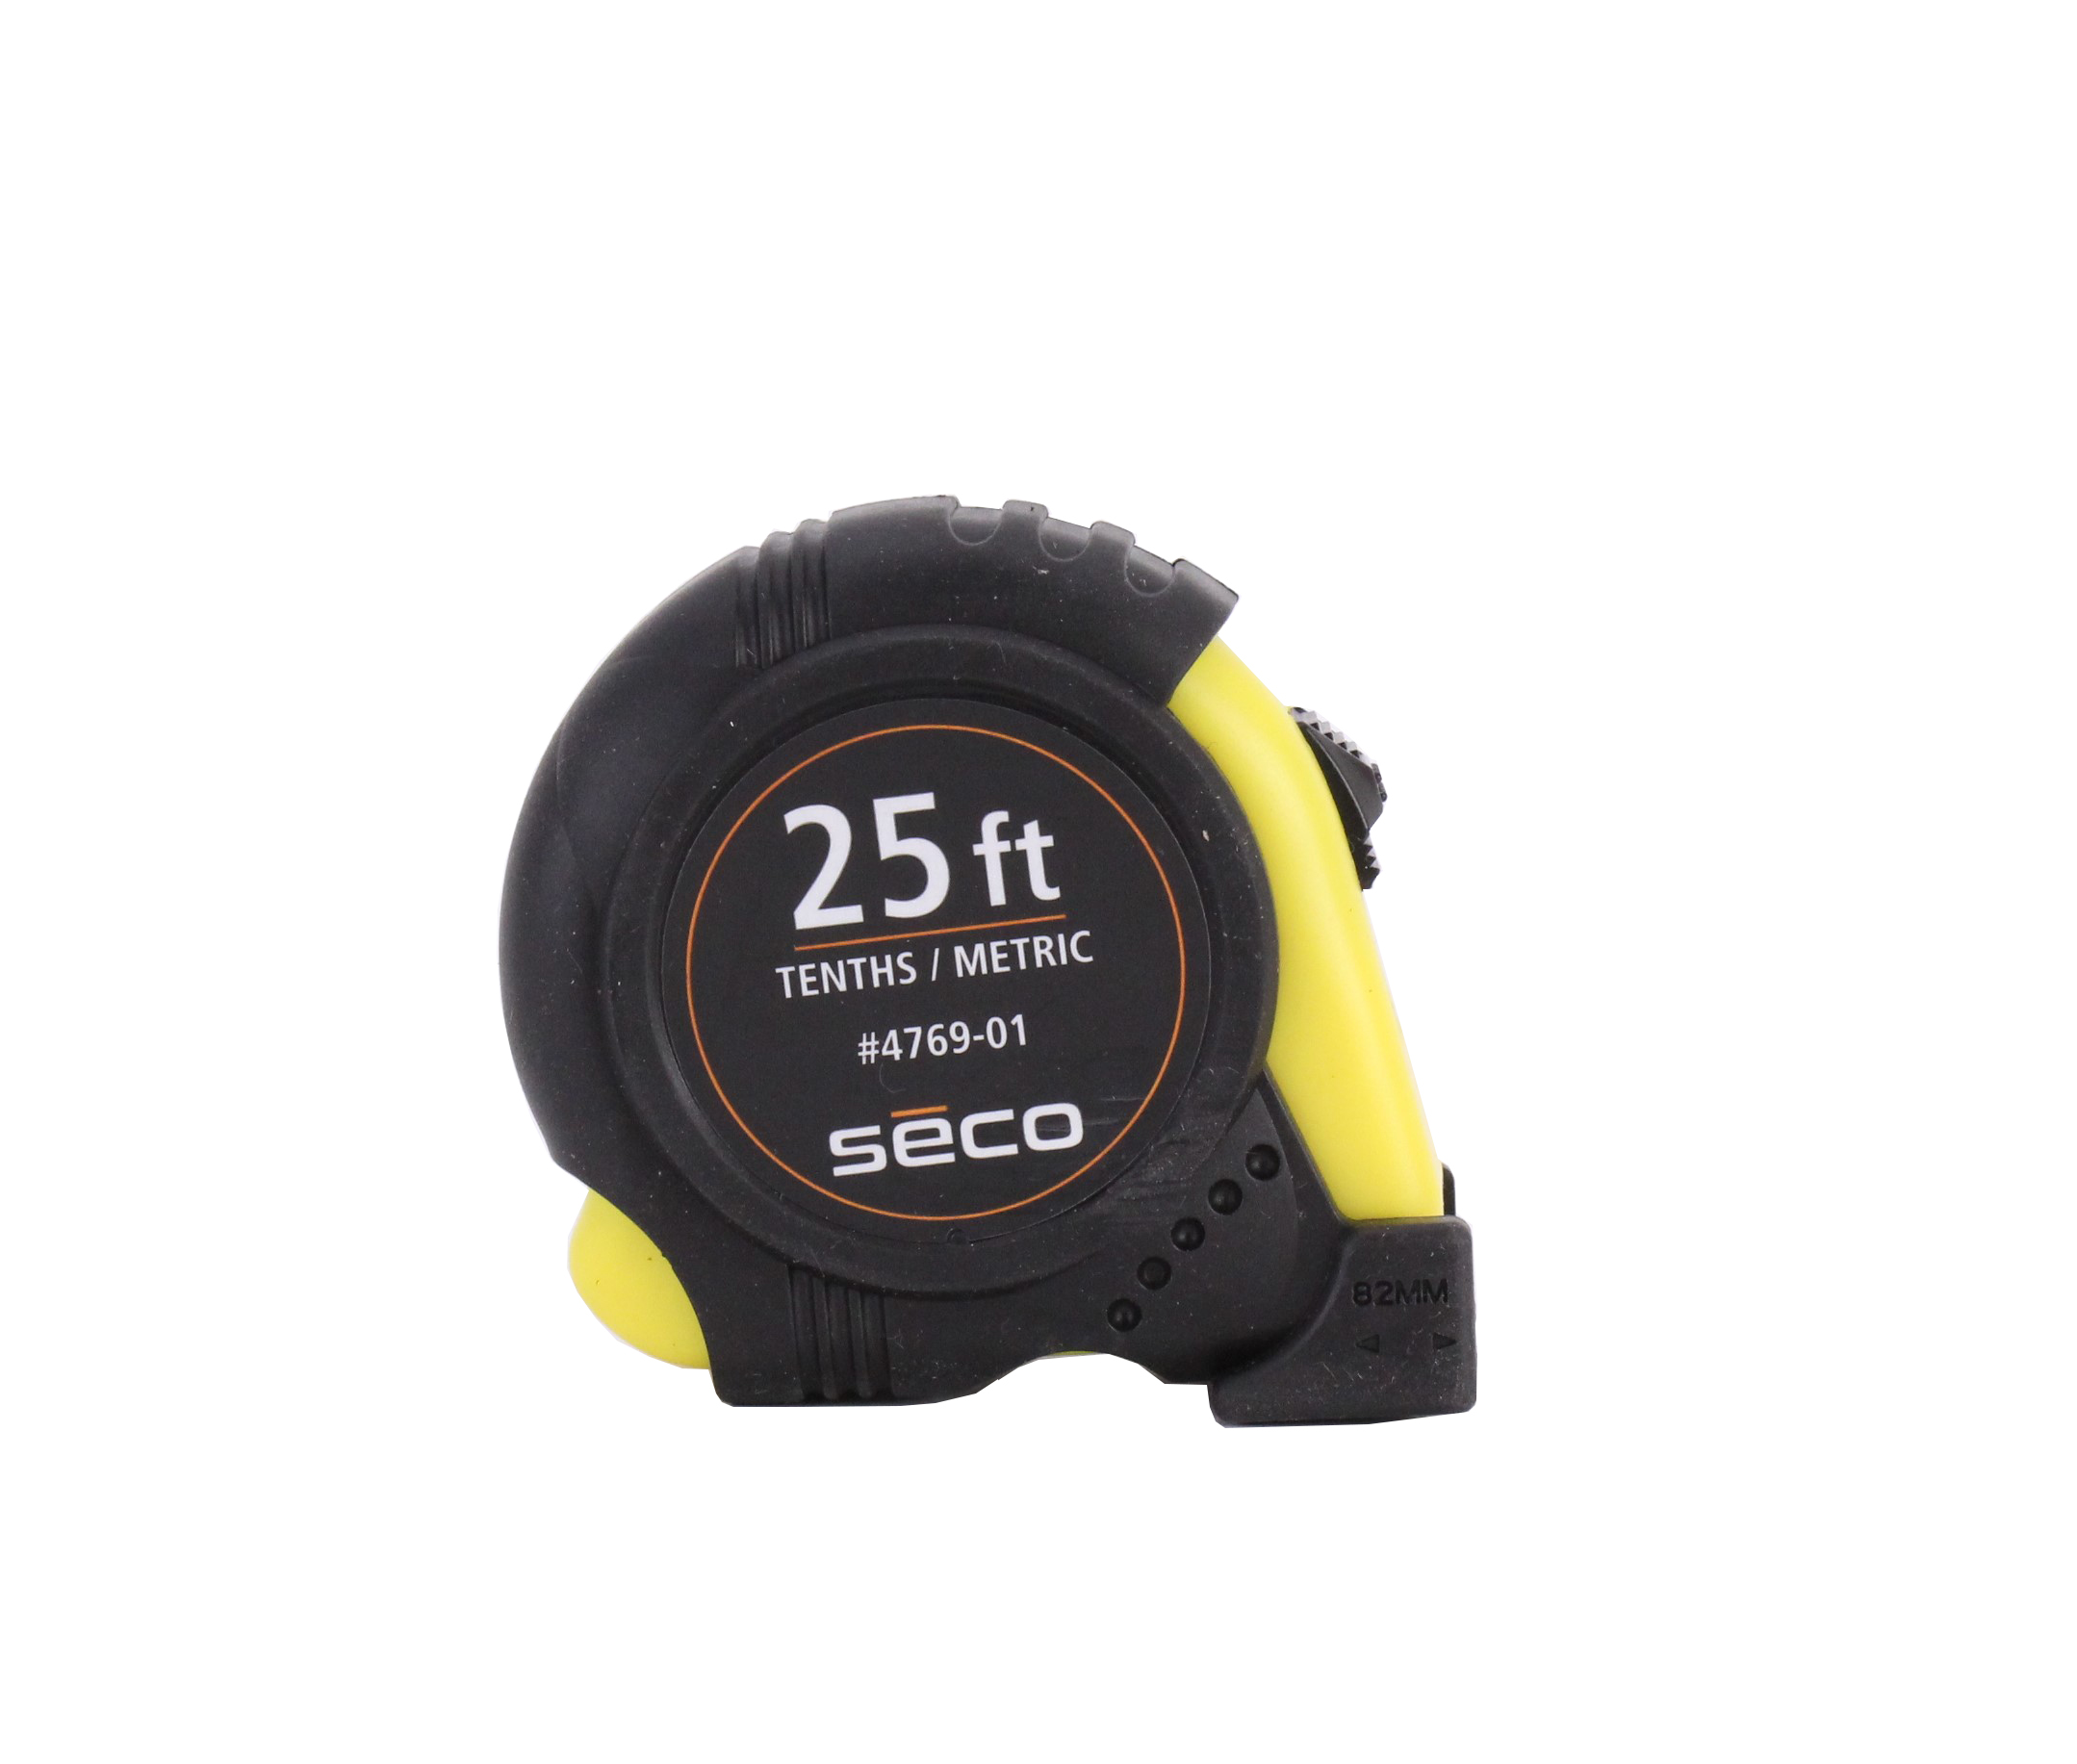 Seco Surveyors Engineers Tape 25ft Part number 4769-01 Dual Grad Metric & Tenths 